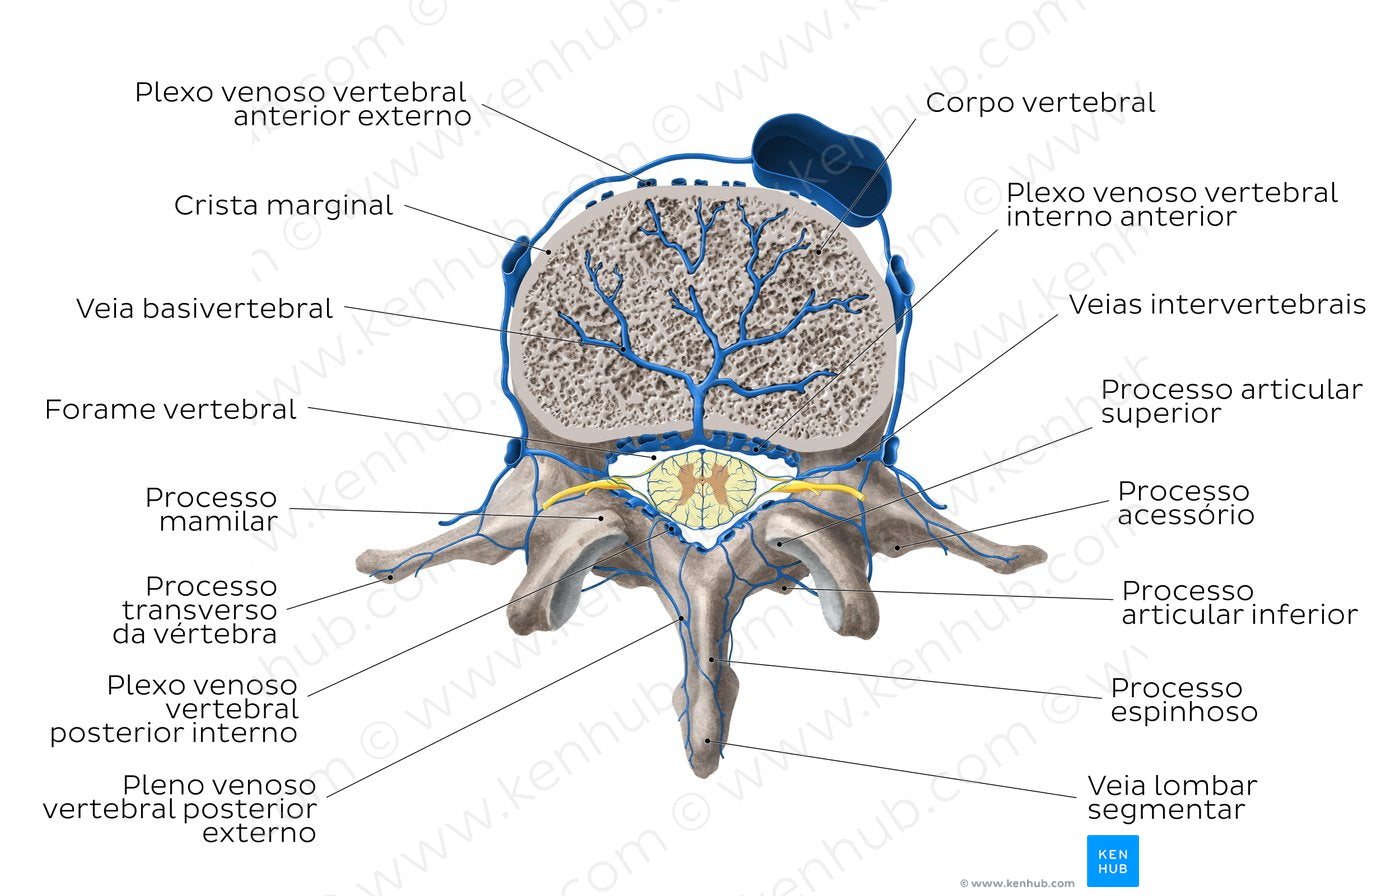 Veins of the isolated vertebra (Portuguese)